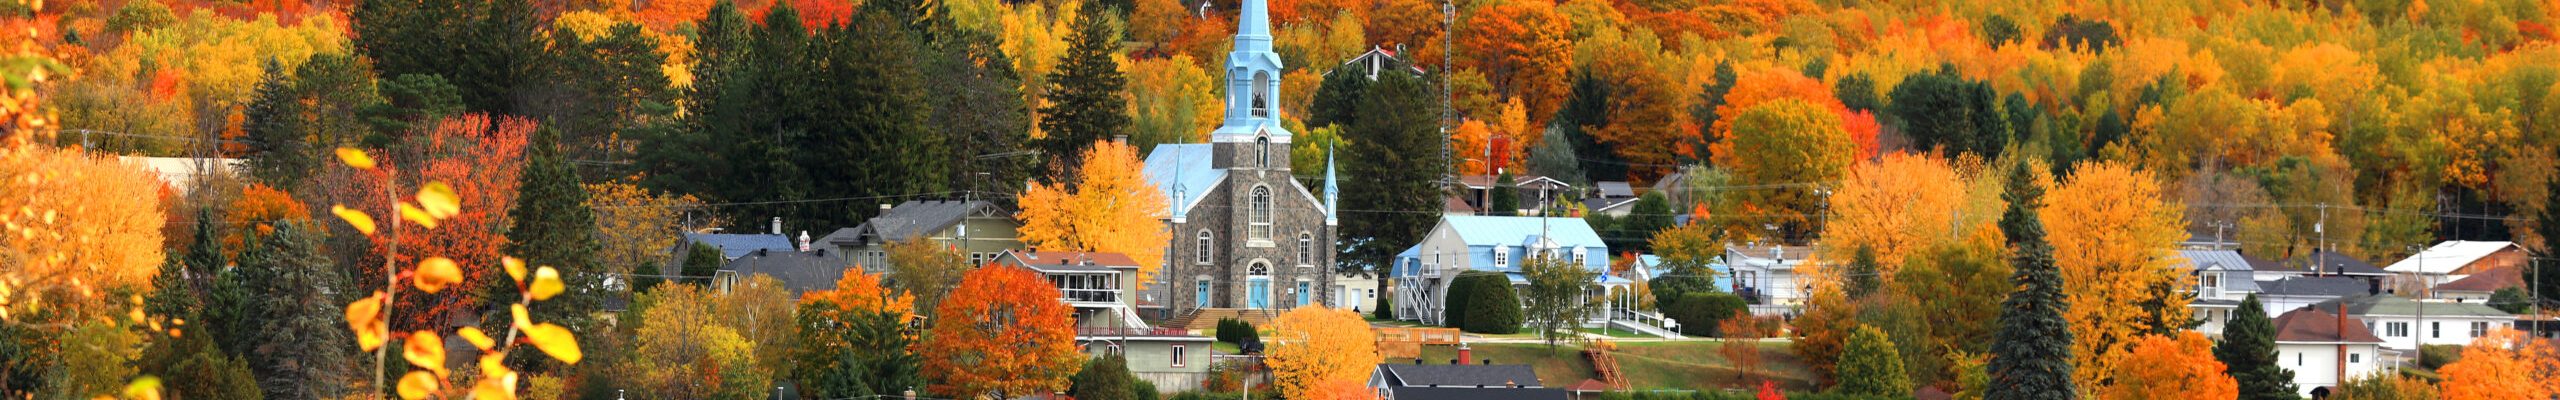 Quebec, Canada - Autumn colours of landscape